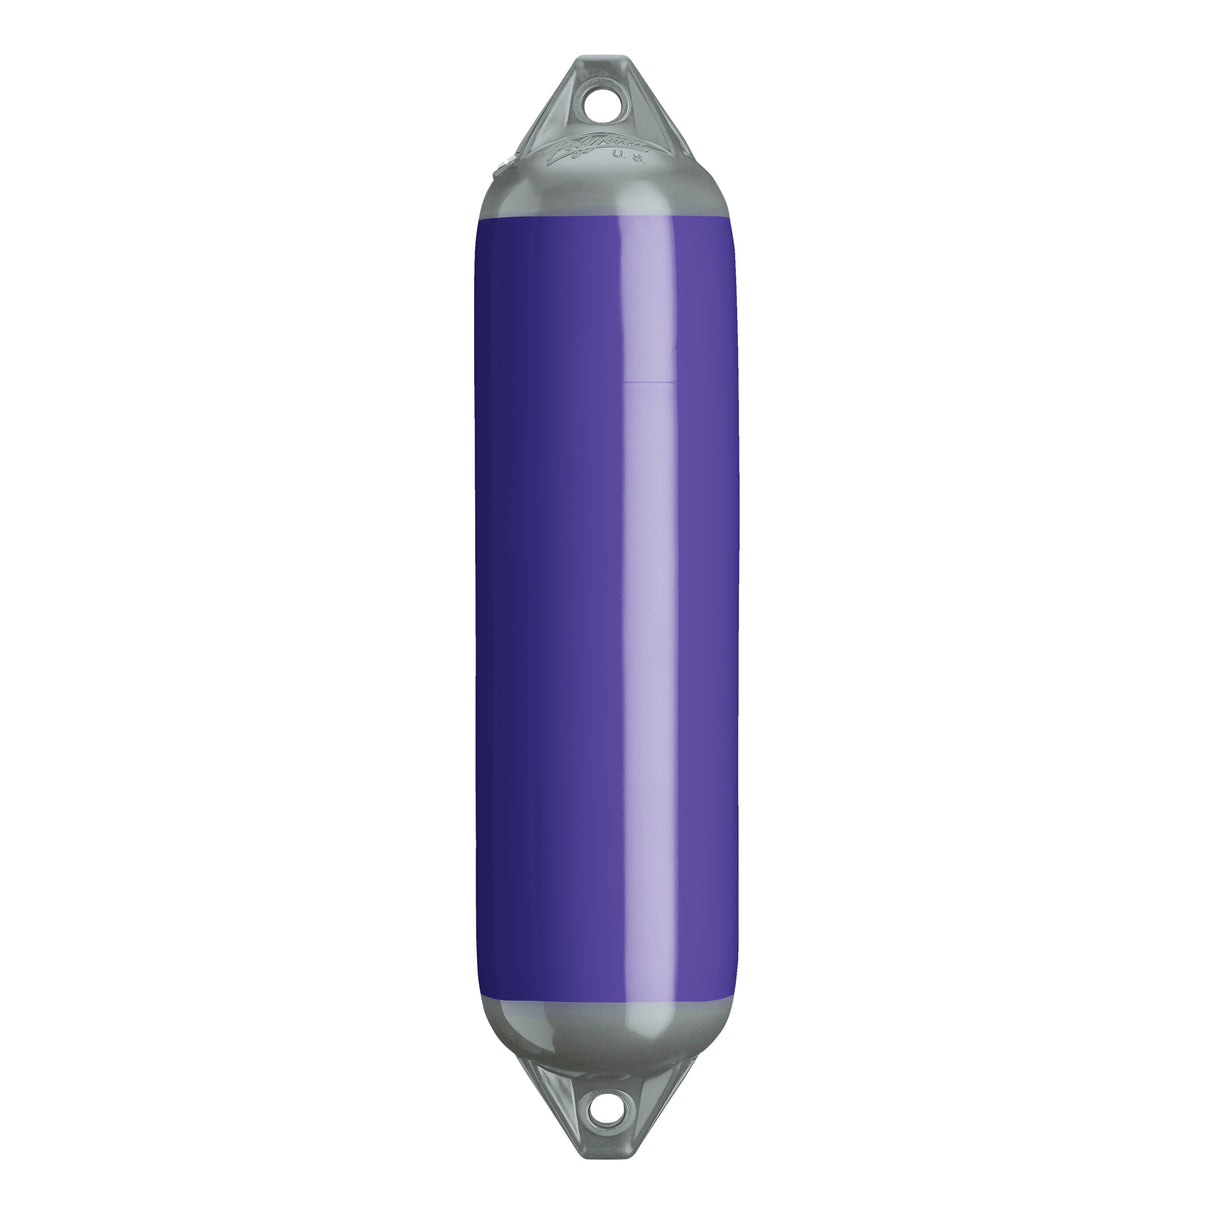 Purple boat fender with Grey-Top, Polyform F-1